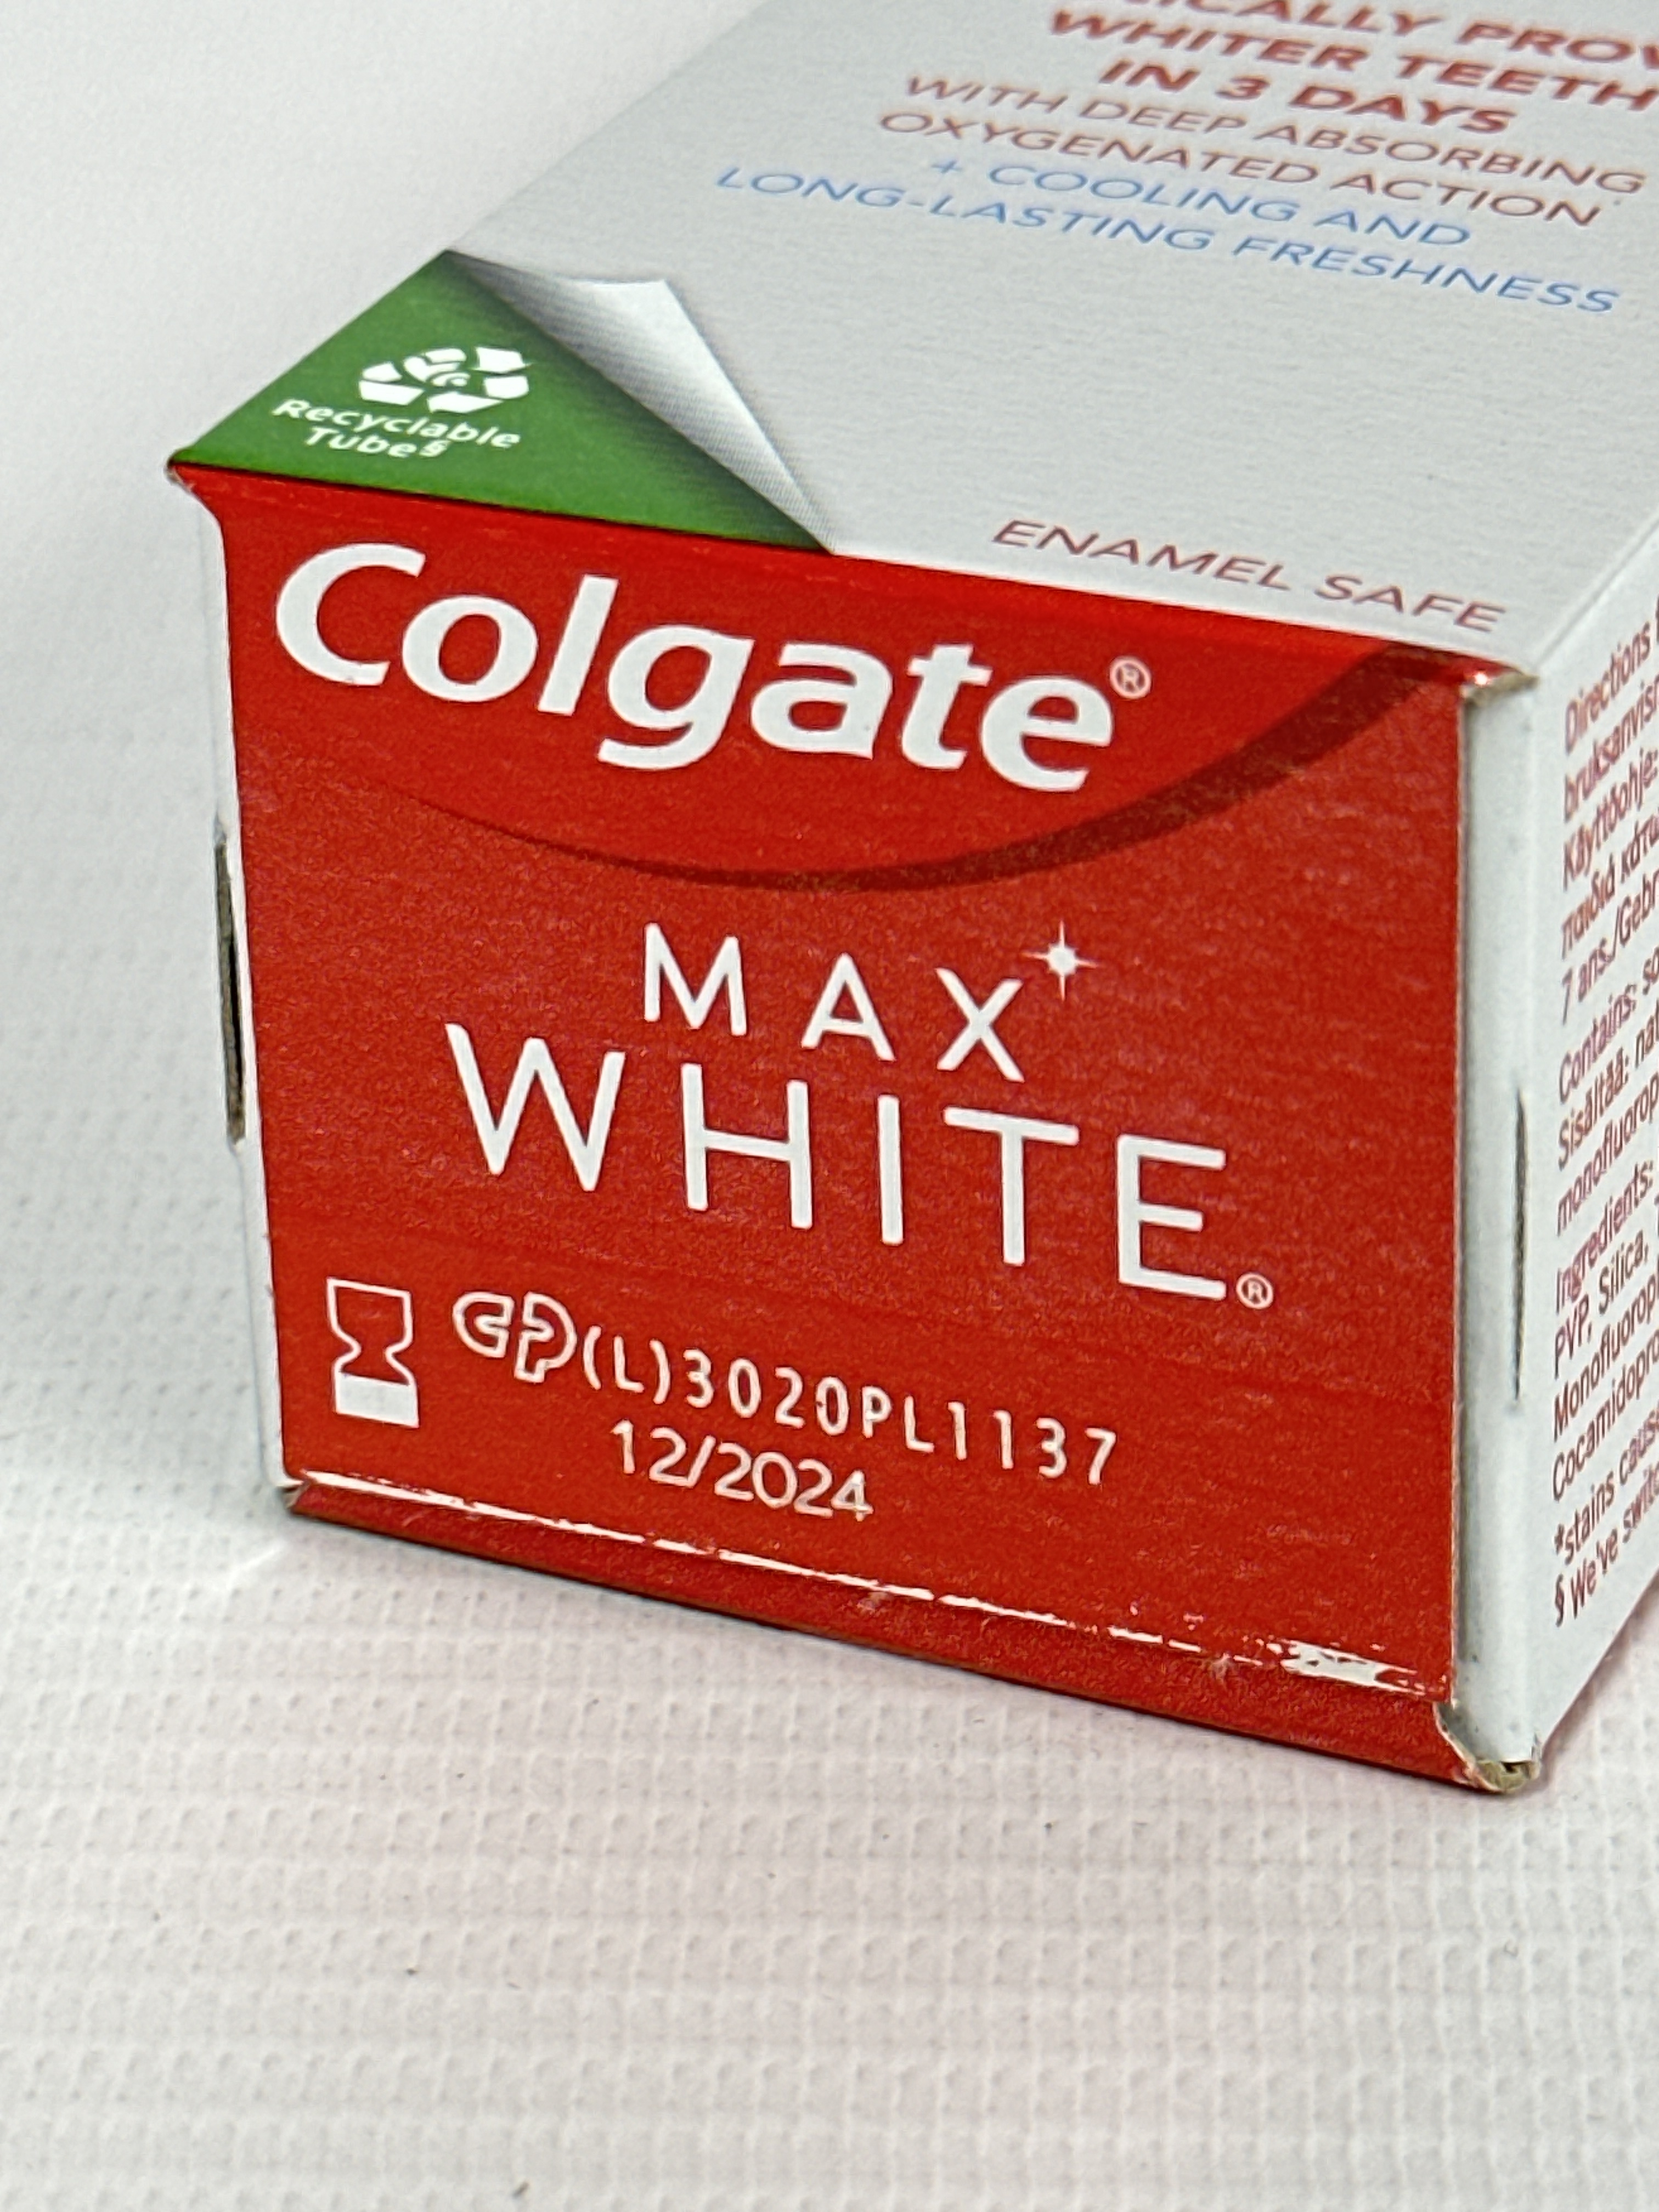 2 off New Colgate Max White